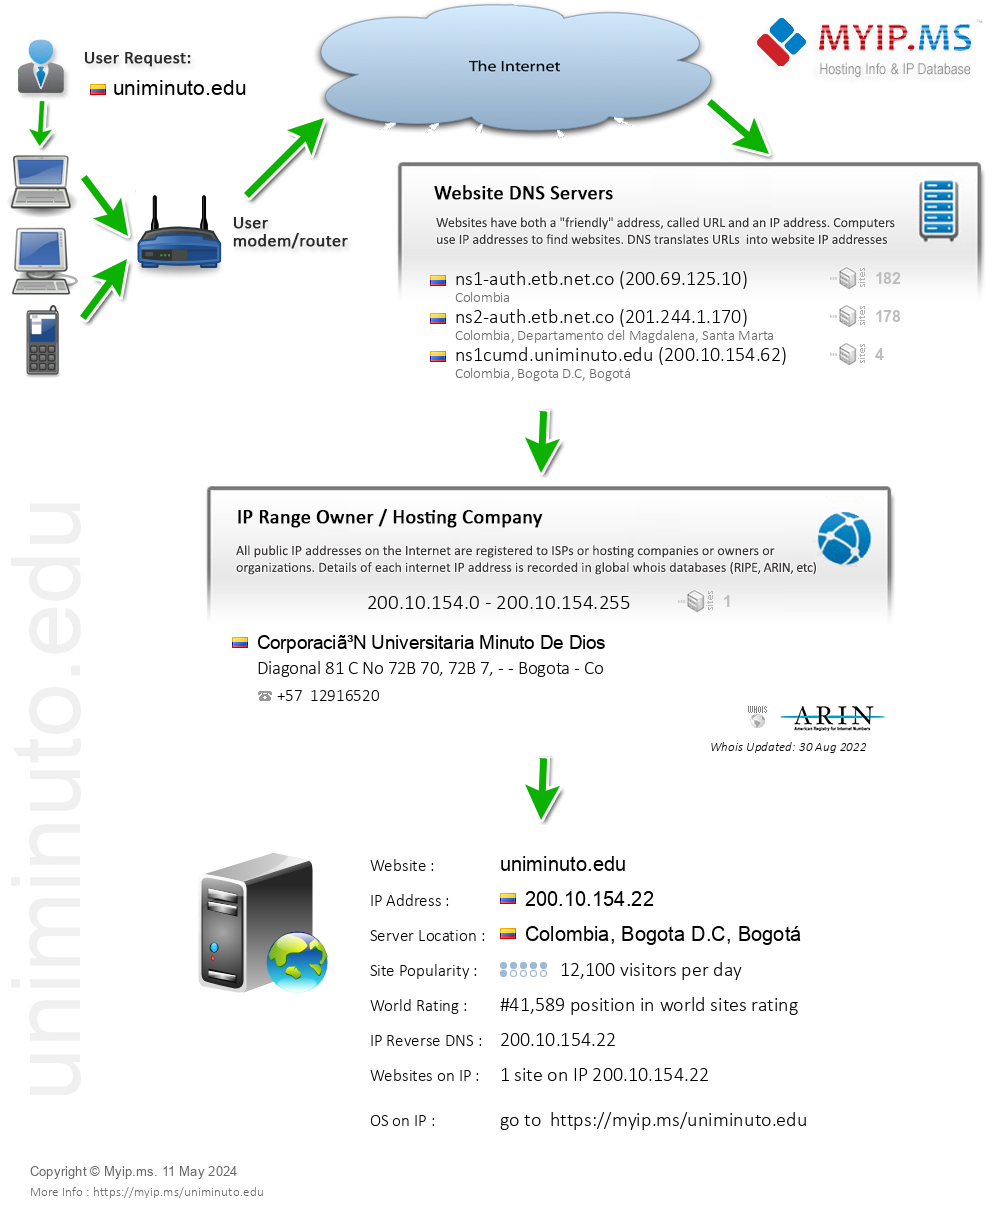 Uniminuto.edu - Website Hosting Visual IP Diagram